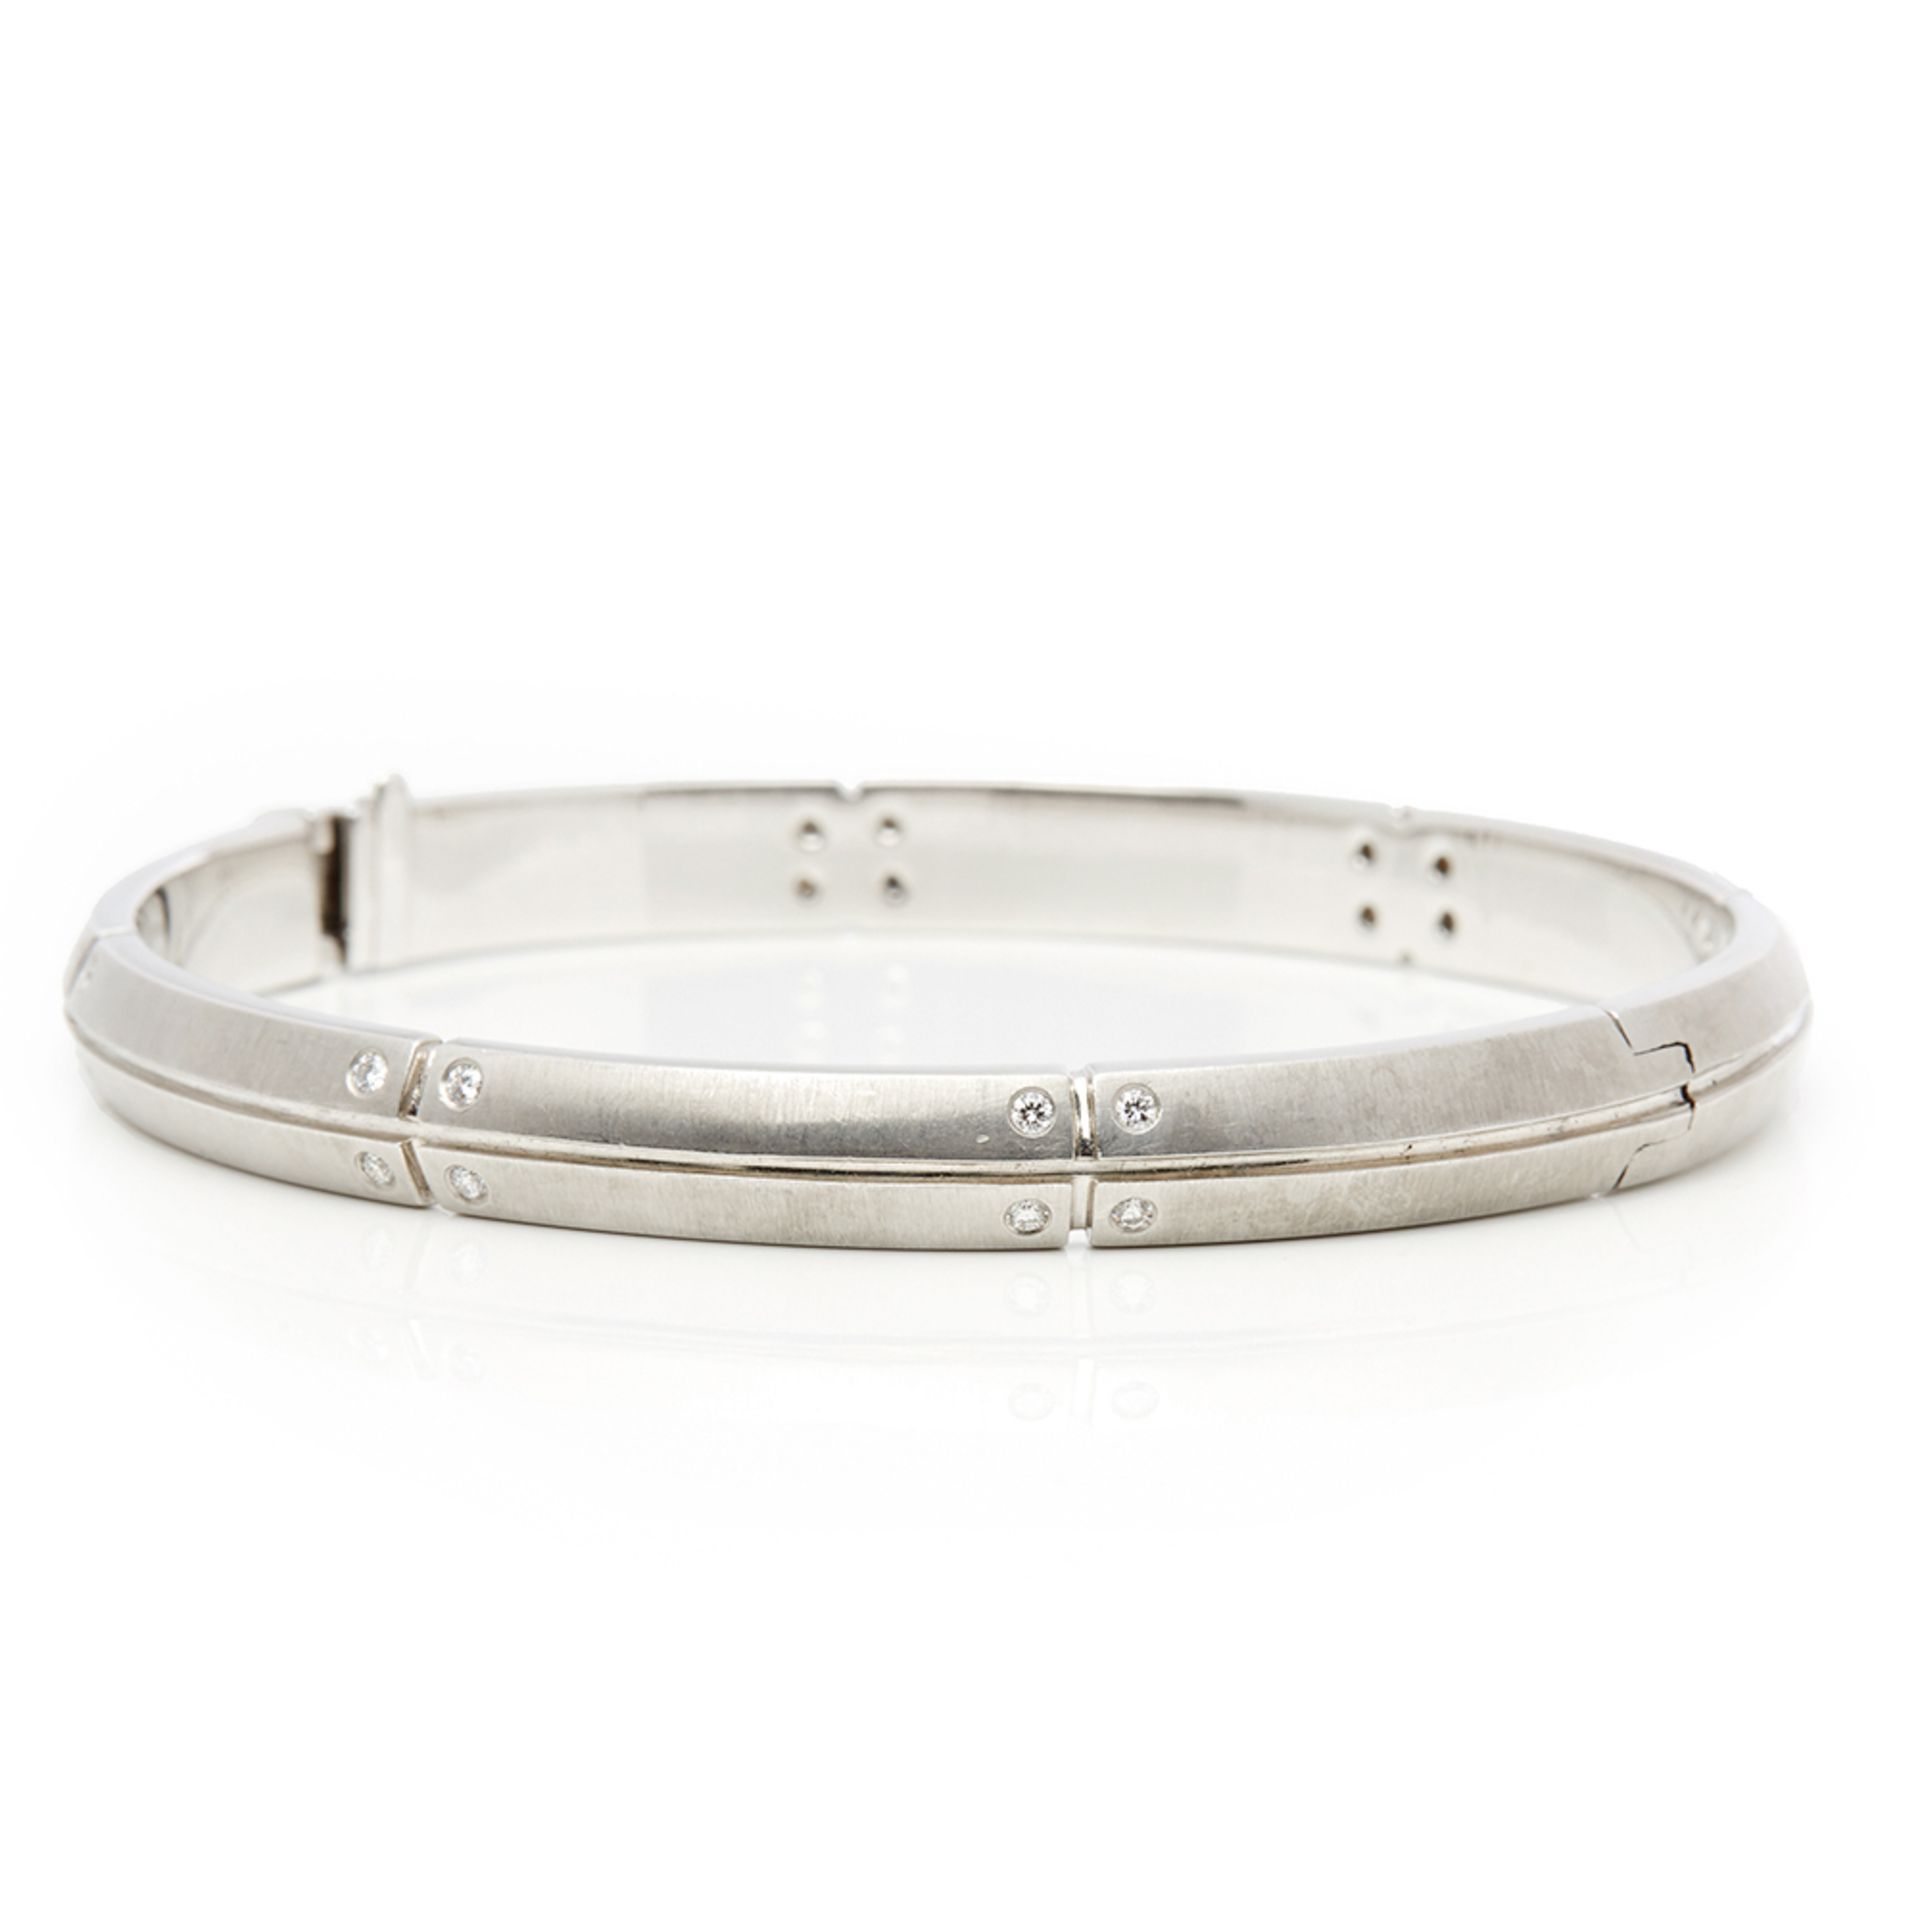 Tiffany & Co. 18k White Gold Diamond Streamerica Bracelet - Image 3 of 8